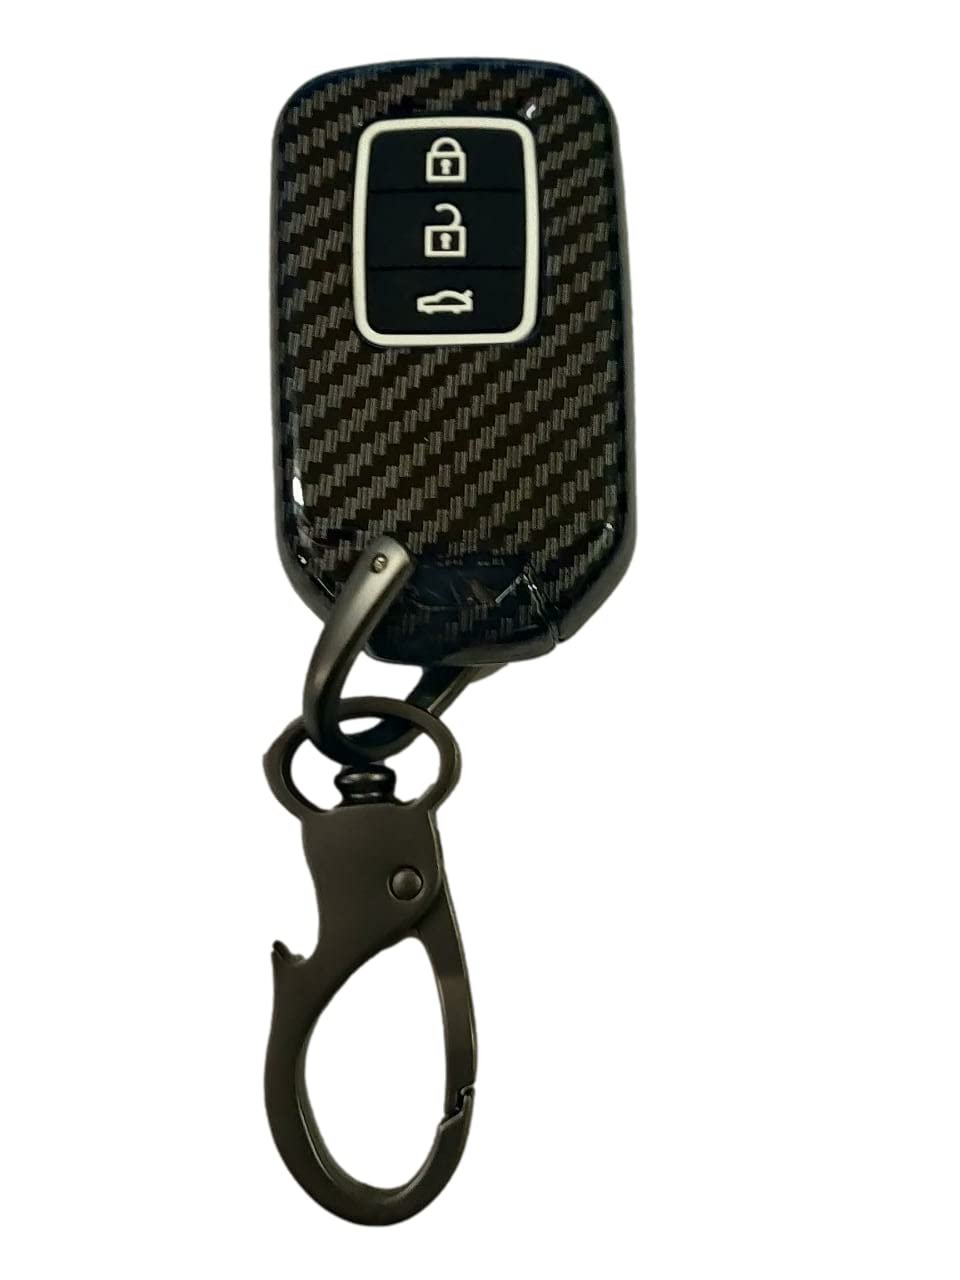 TPU Leather Pattern Key Cover 3 Button Remote Compatible with Honda Accord, City, Civic, Amaze Jazz 3 Button Push Button Start Smart Key (Black) Image 